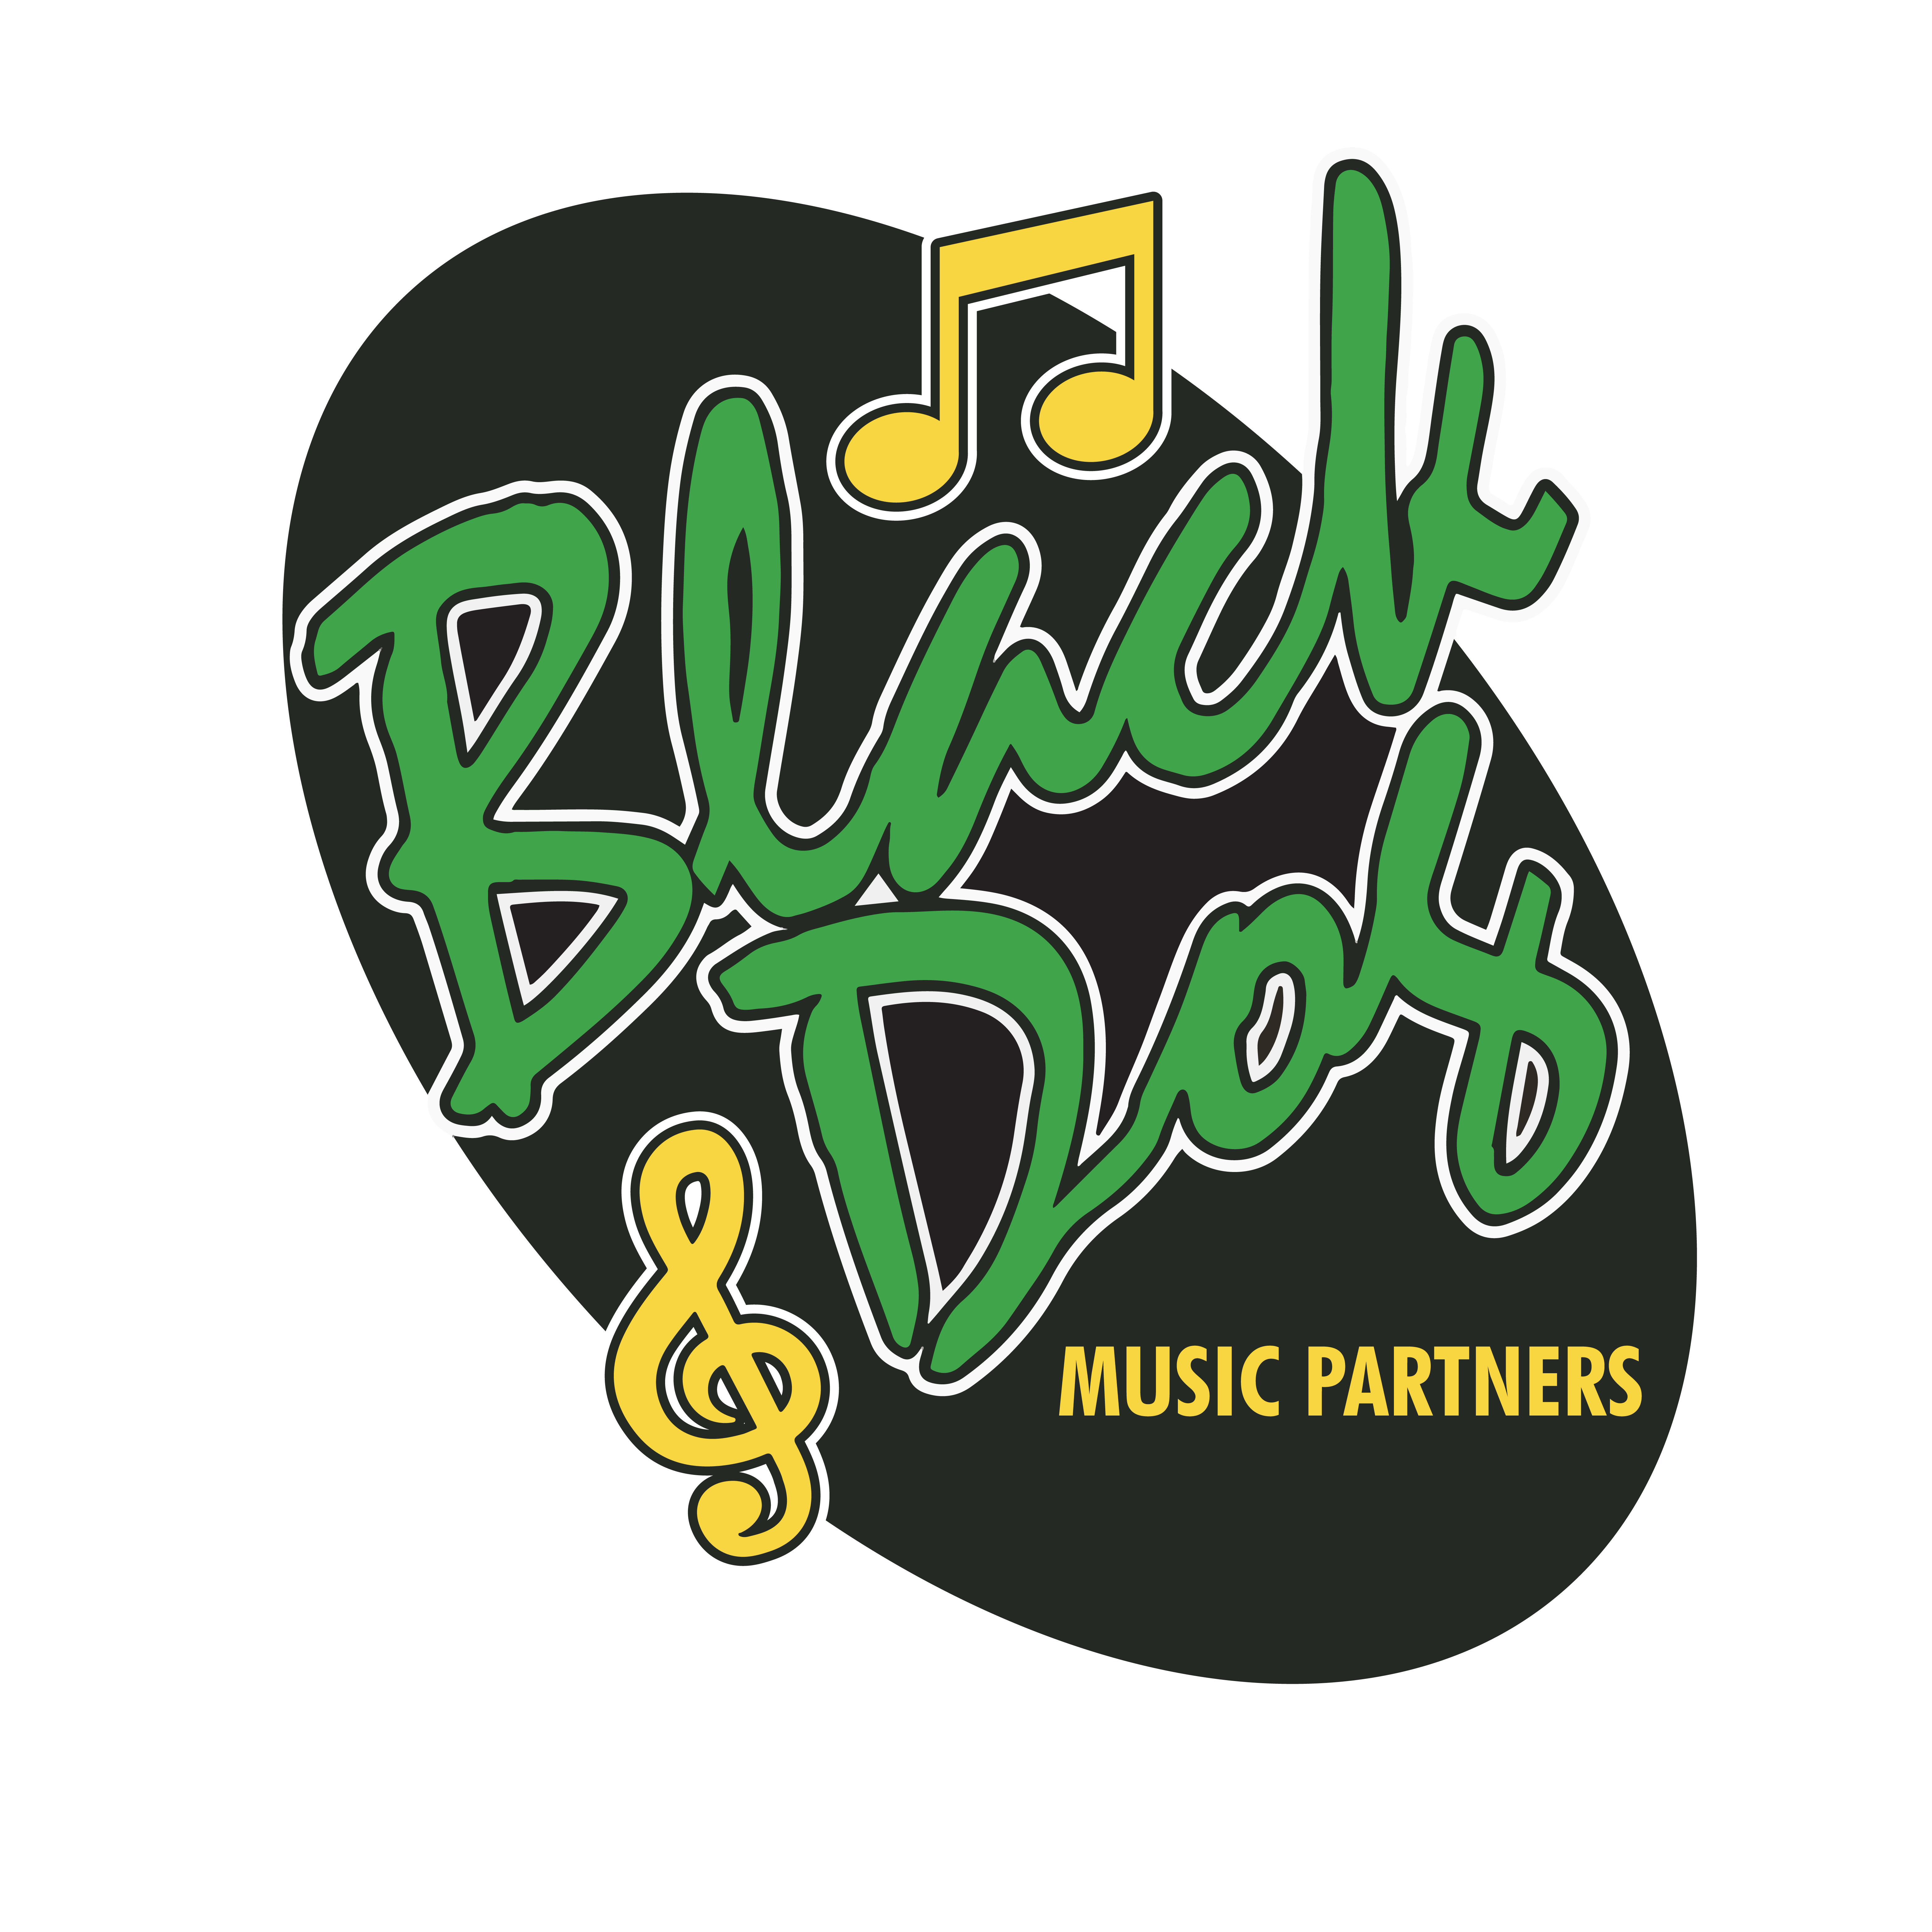 (c) Blackdogmusicpartners.com